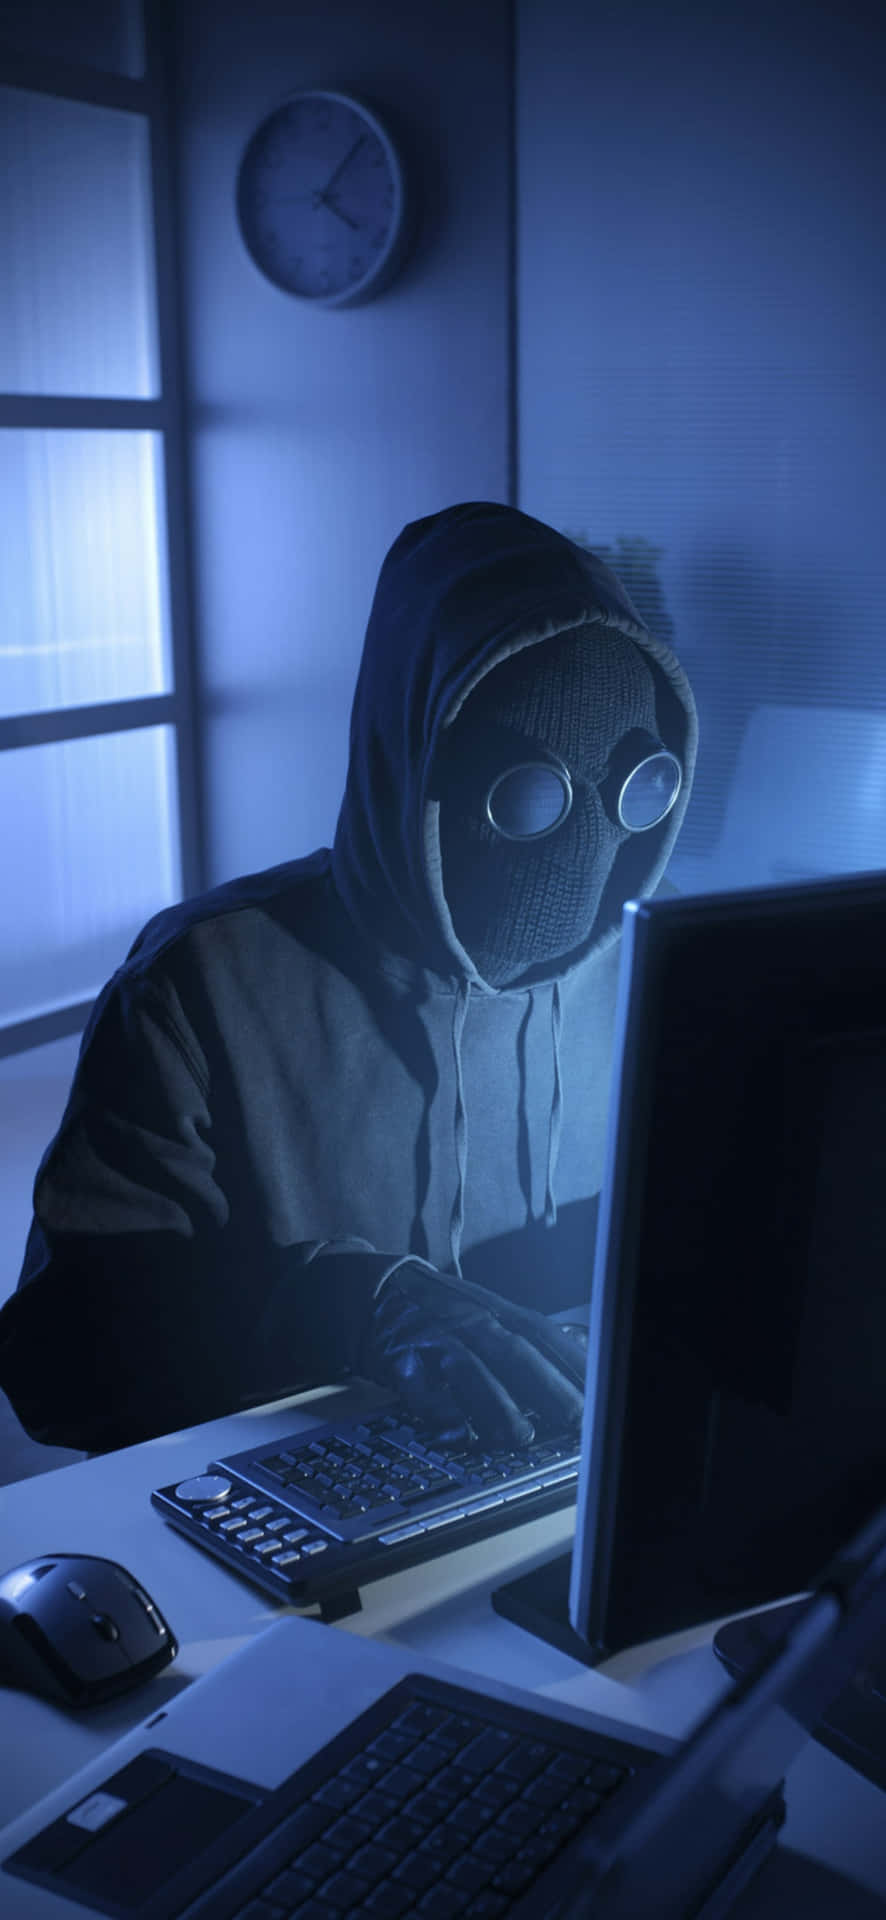 Hackerin Dark Roomwith Computer.jpg Background